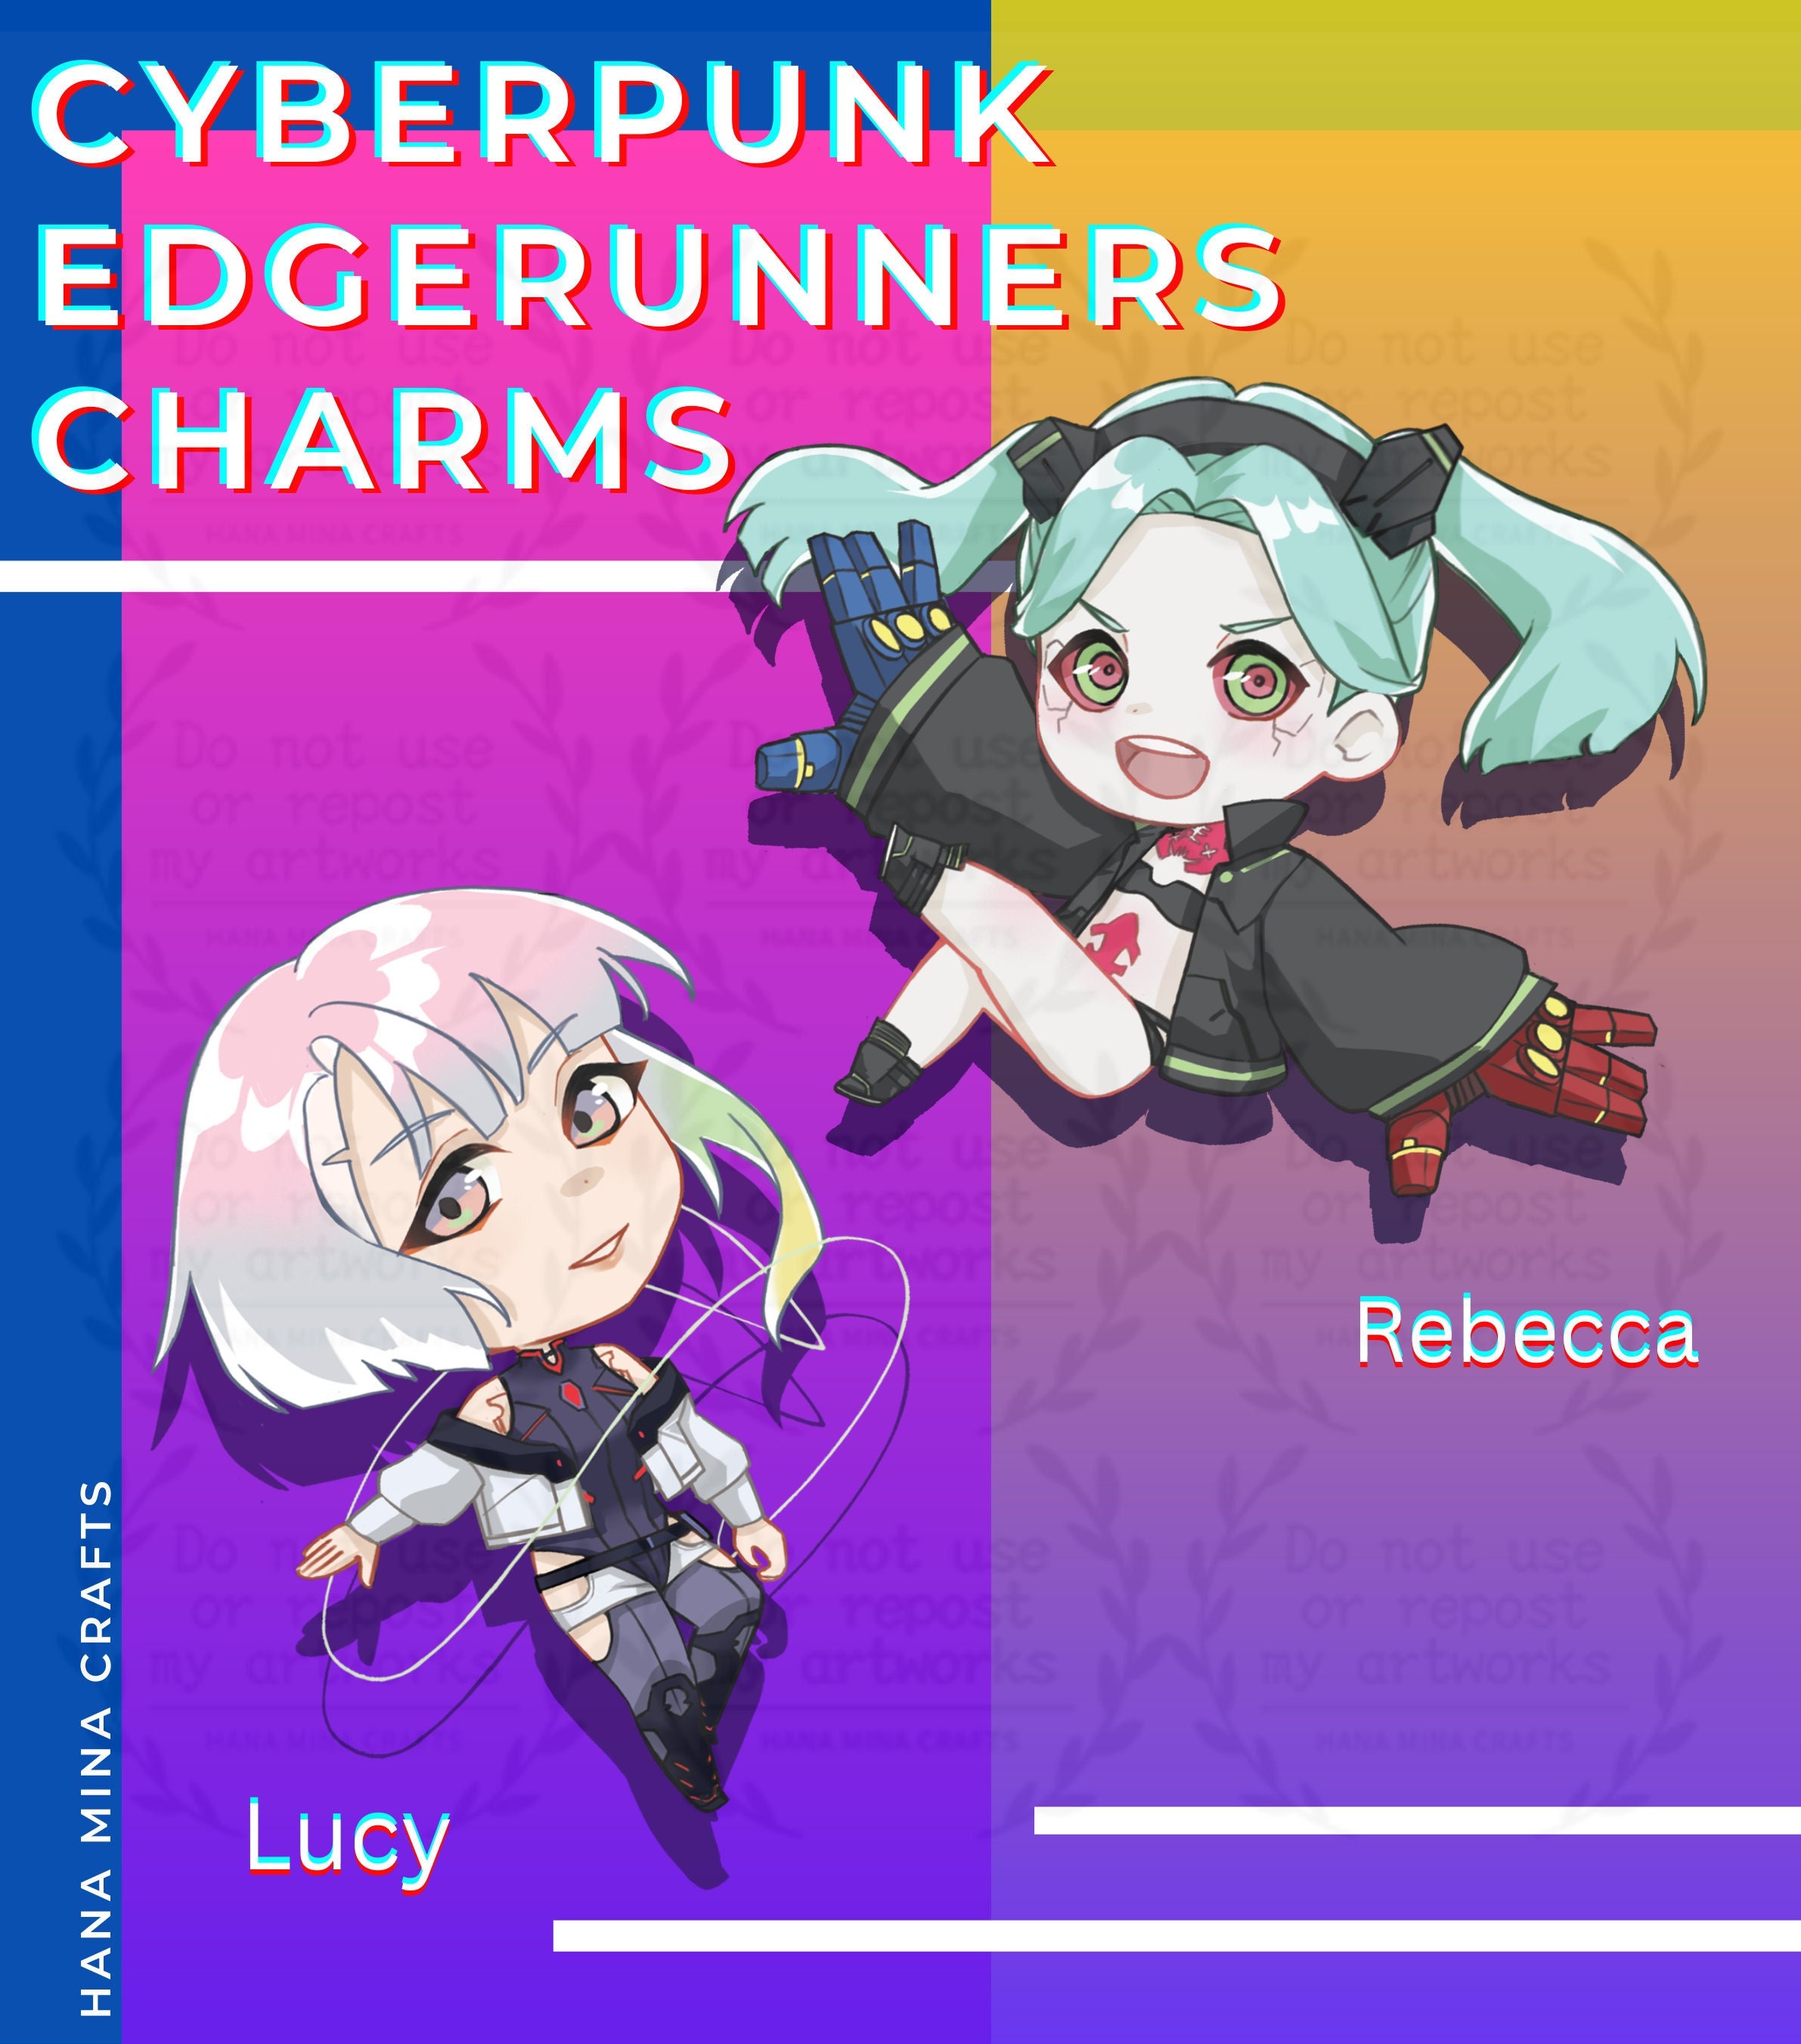 ♡ Anime: Cyberpunk: Edgerunners Character: Lucy - - - 𝘵𝘢𝘨𝘴